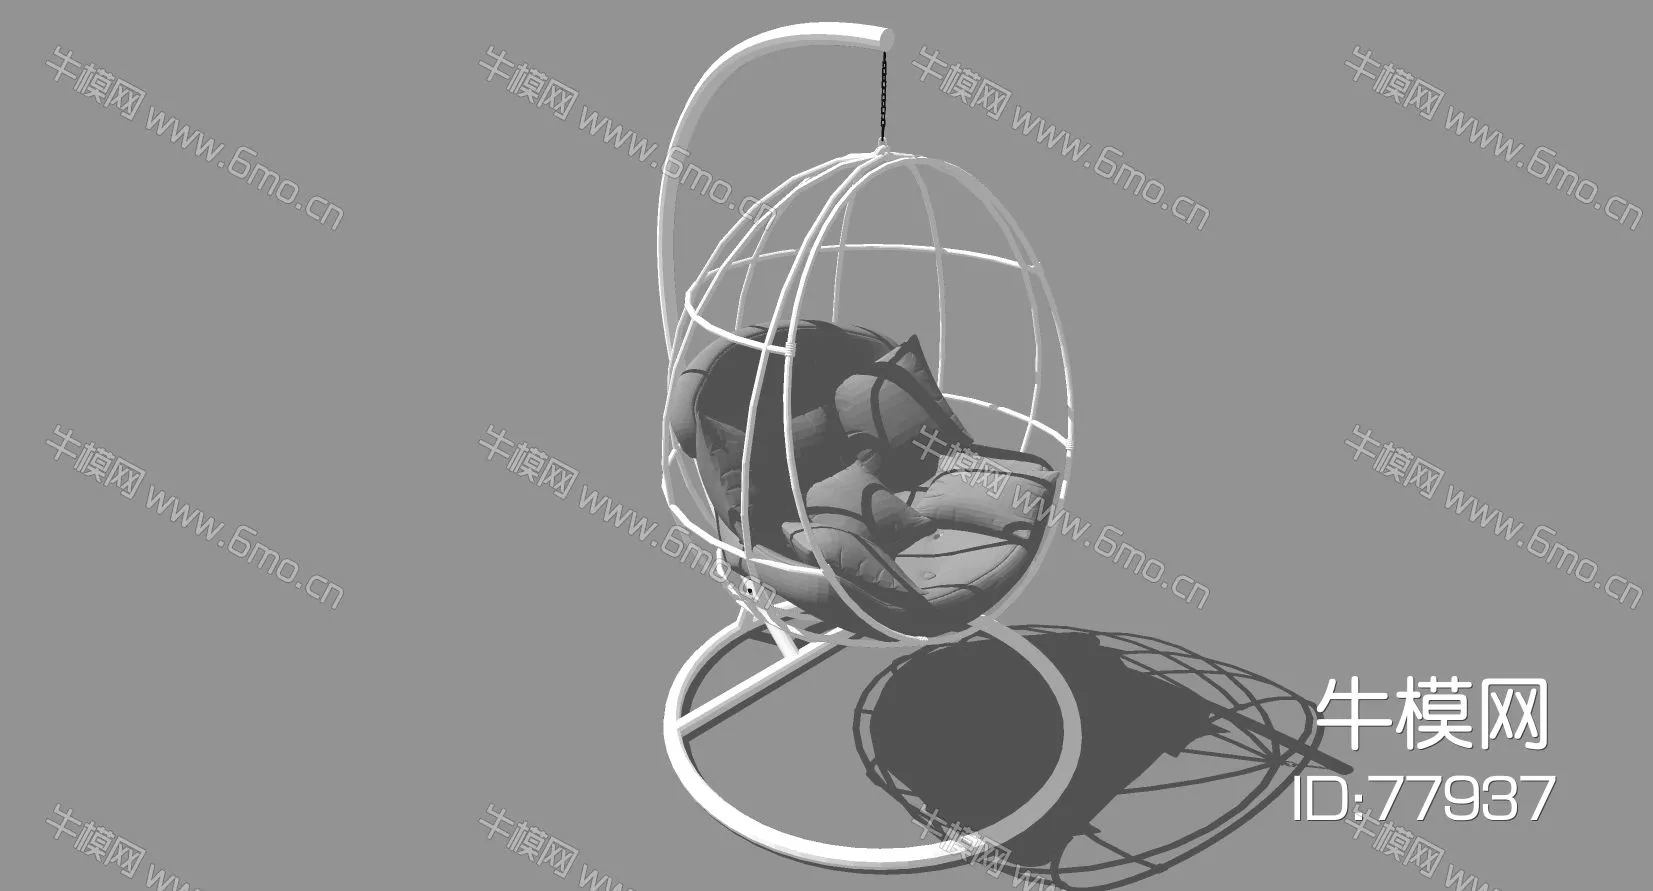 MINIMALIST LOUNGLE CHAIR - SKETCHUP 3D MODEL - ENSCAPE - 77937